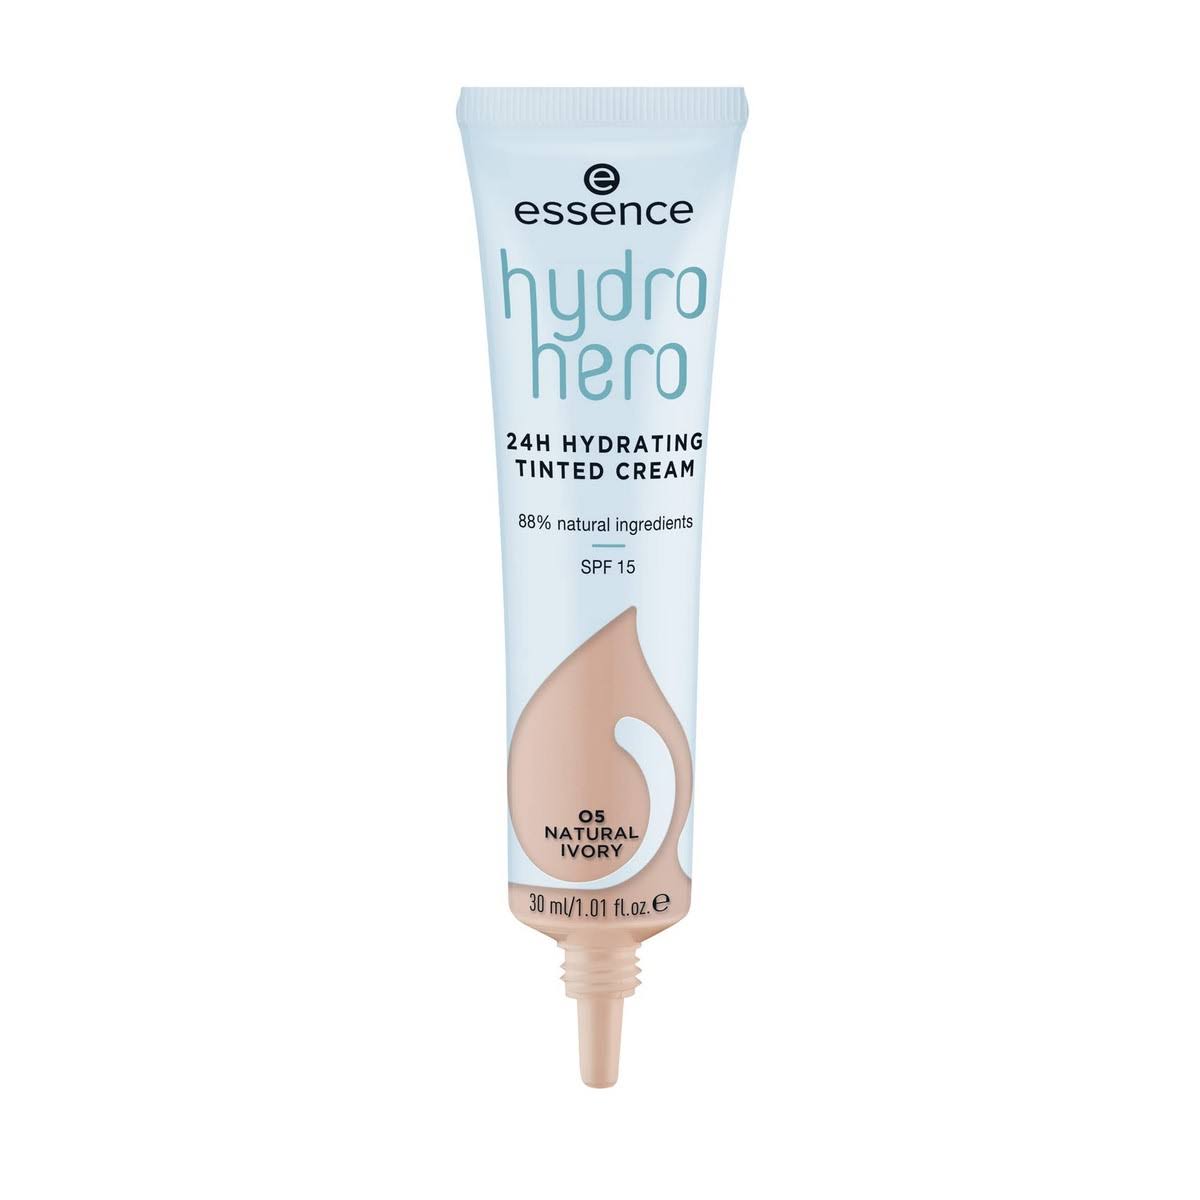 essence Hydro Hero 24h Hydrating Tinted Cream SPF15 05 Natural Ivory 30ml